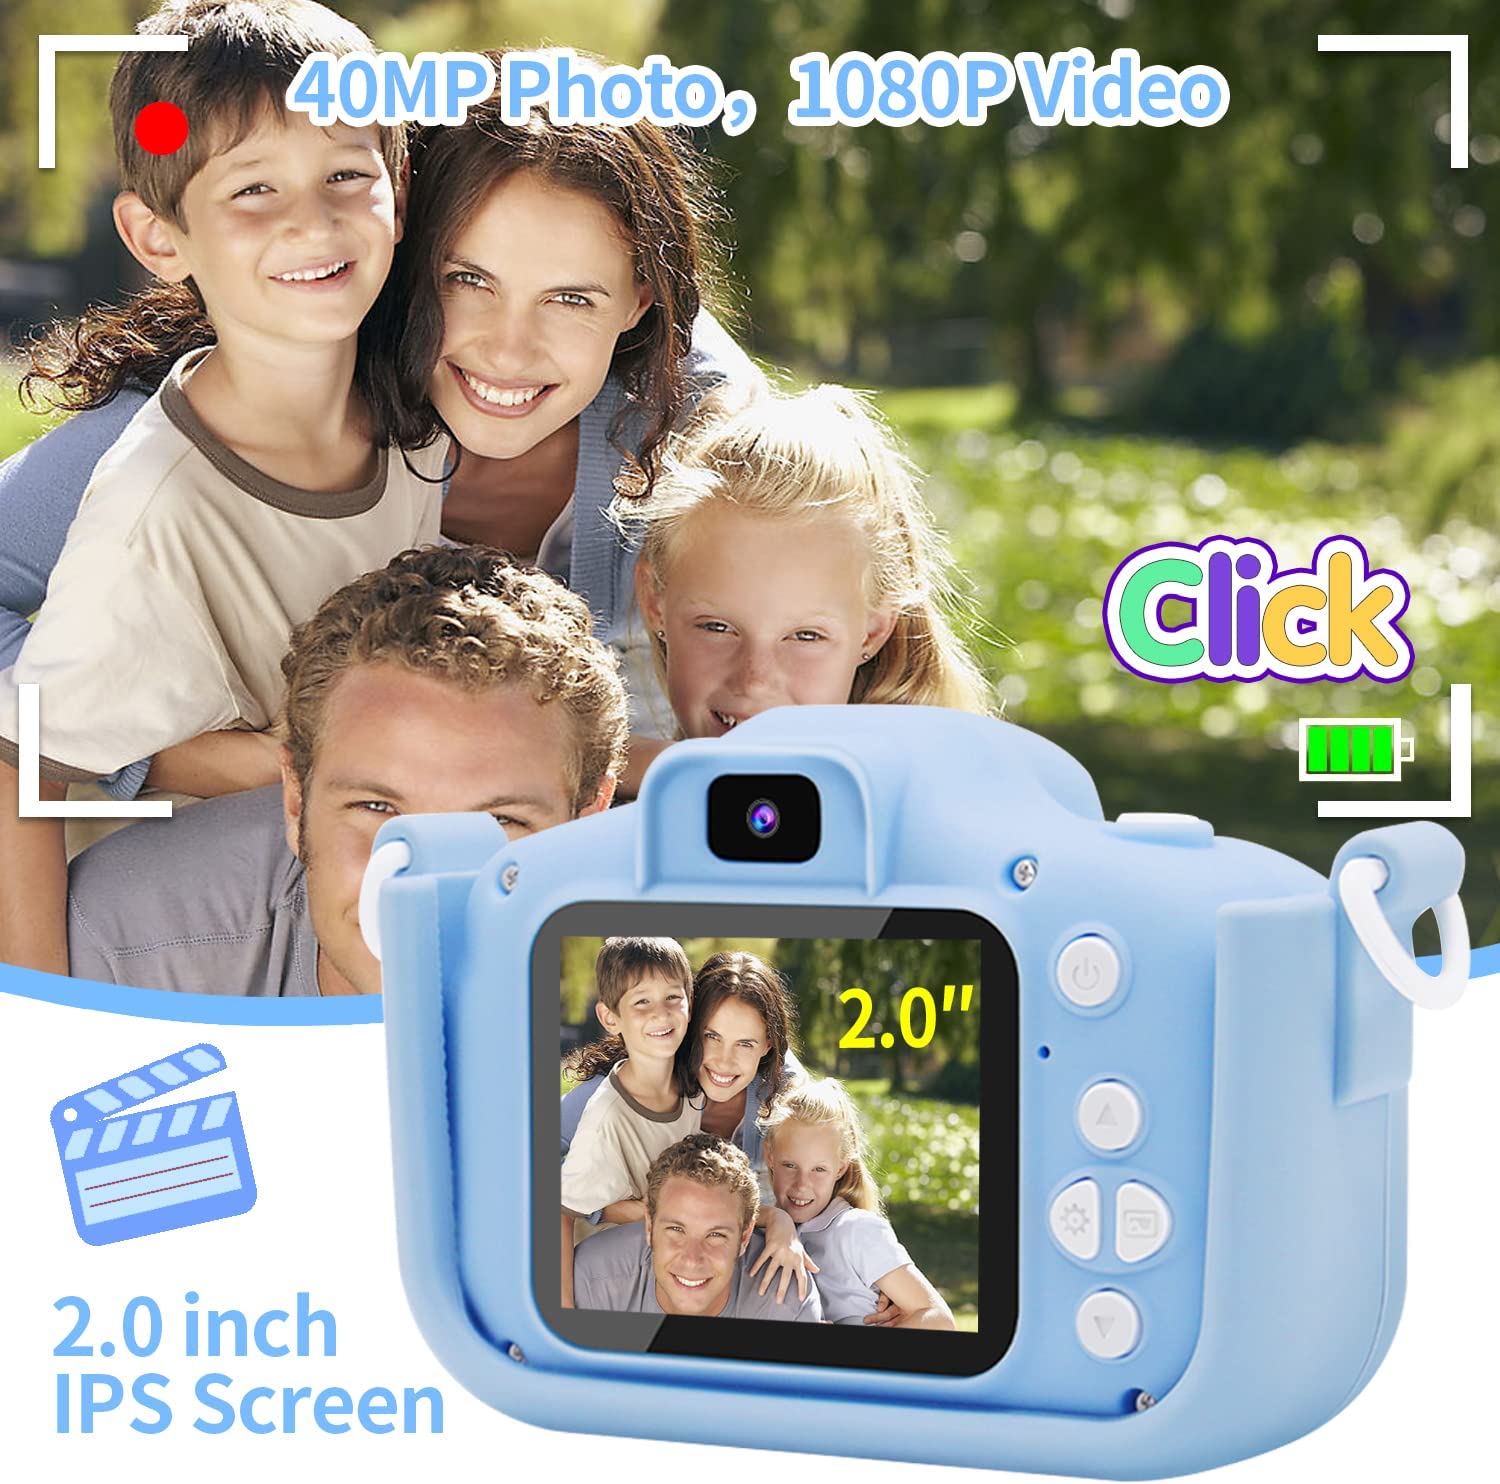 Digital-SLR-Cameras-DSLR-Kids-Digital-Camera-1080P-HD-Kid-Digital-Video-Mini-Camera-with-32GB-SD-Card-for-3-7-Years-Girls-Boys-Blue-6